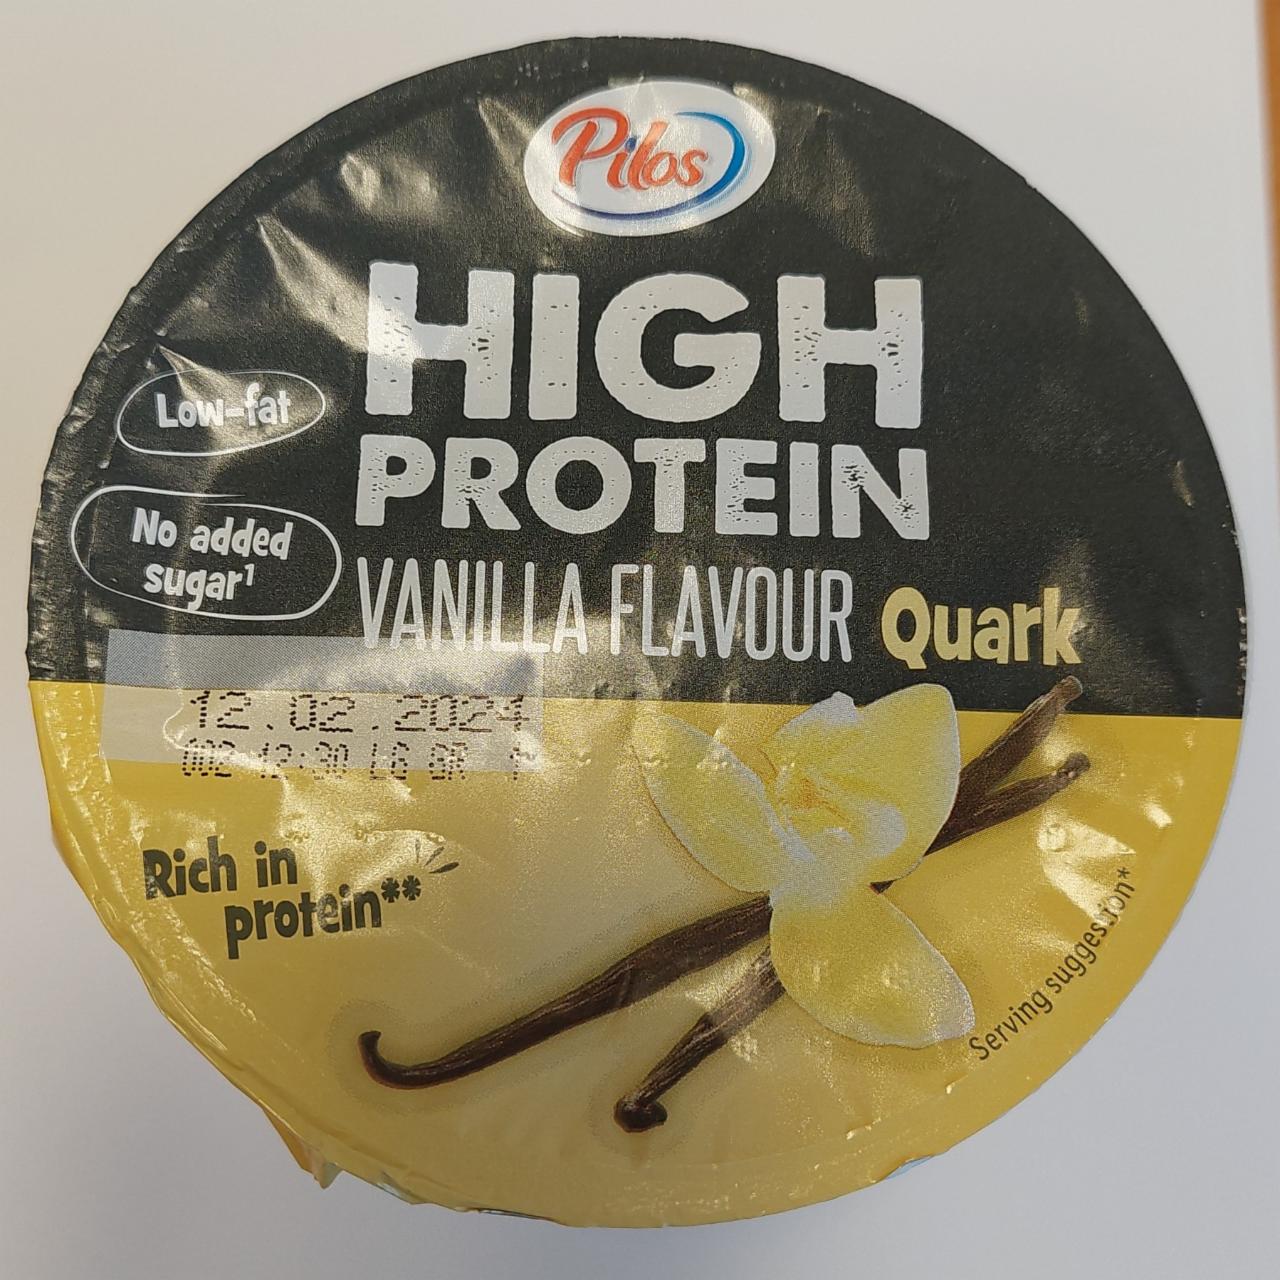 Képek - High protein vanilla flavour Quark Pilos